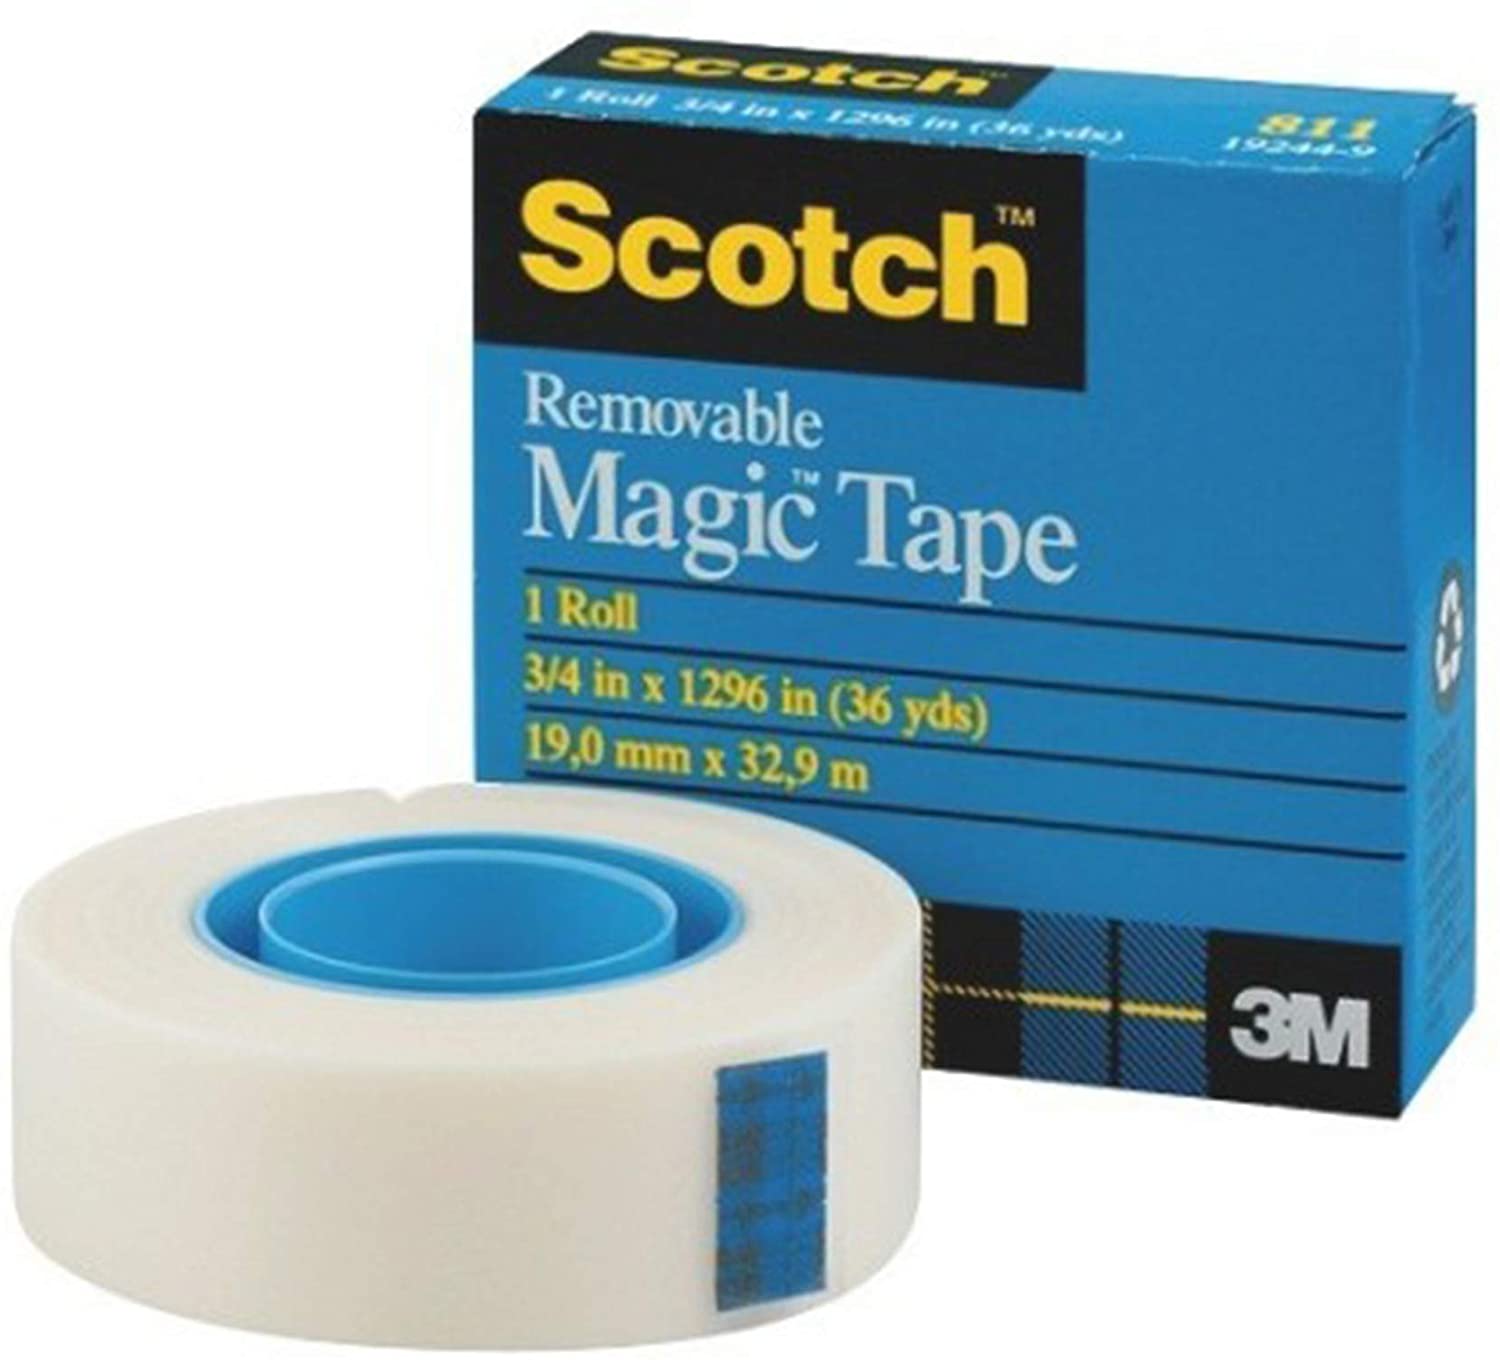 Magic аналоги. Tape Dispenser for Invisible Tape 19 mm x 33 m. Magic Tape скотч. Scotch 811. Скотч "Magic аналог.